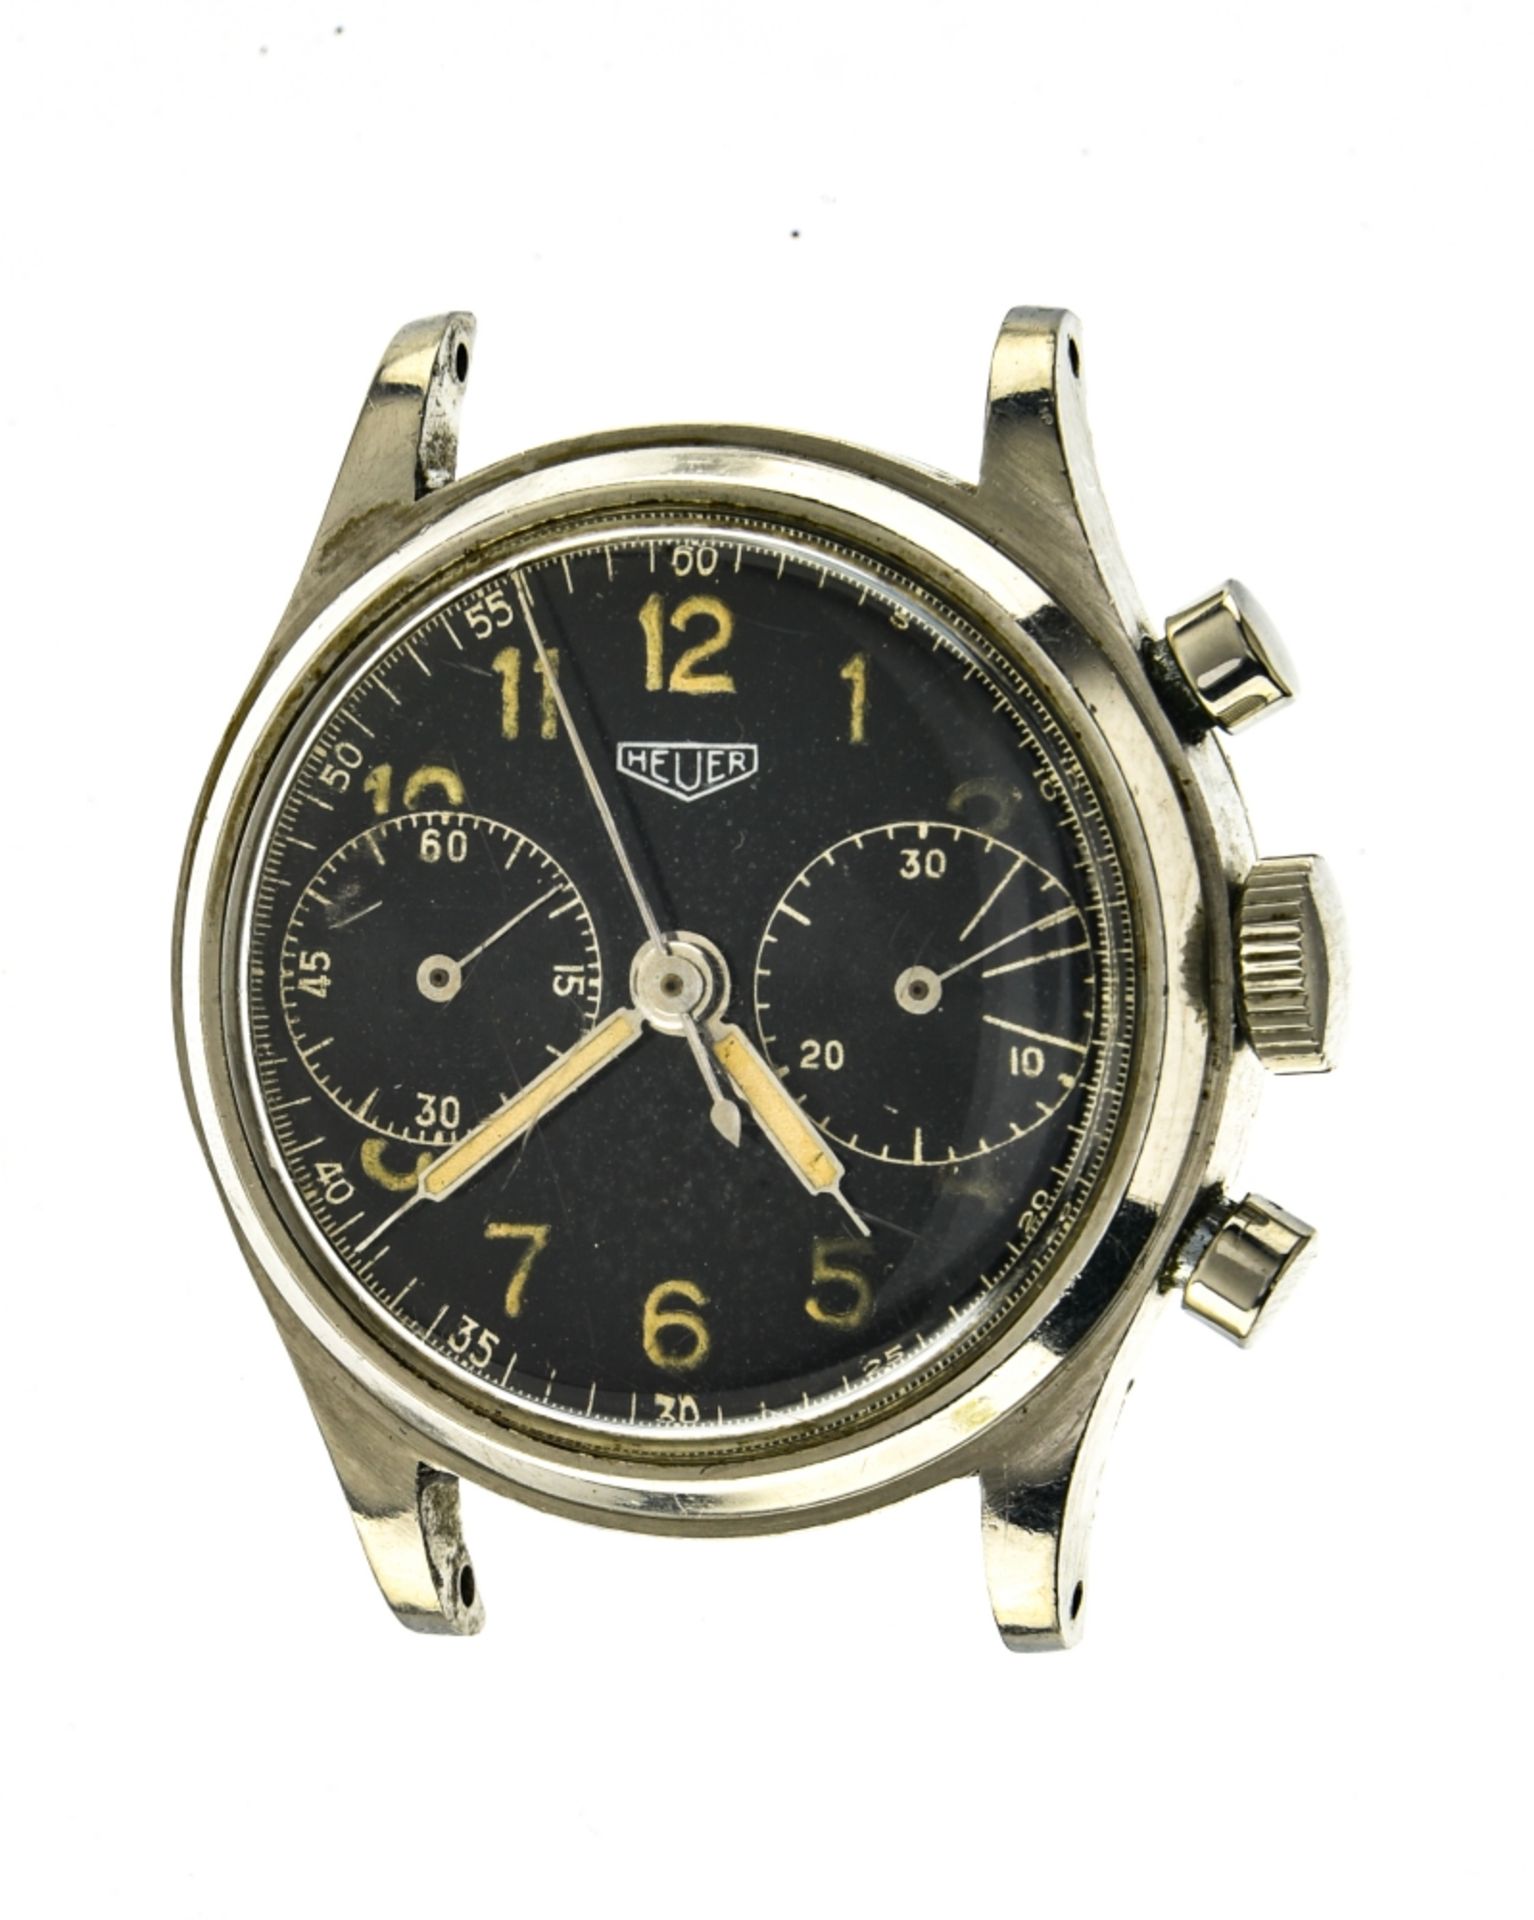 Heuer Heuer chronograph bracelet watch SWITZERLAND 1940-1950 Heuer "Big Eyes" manually-wound steel